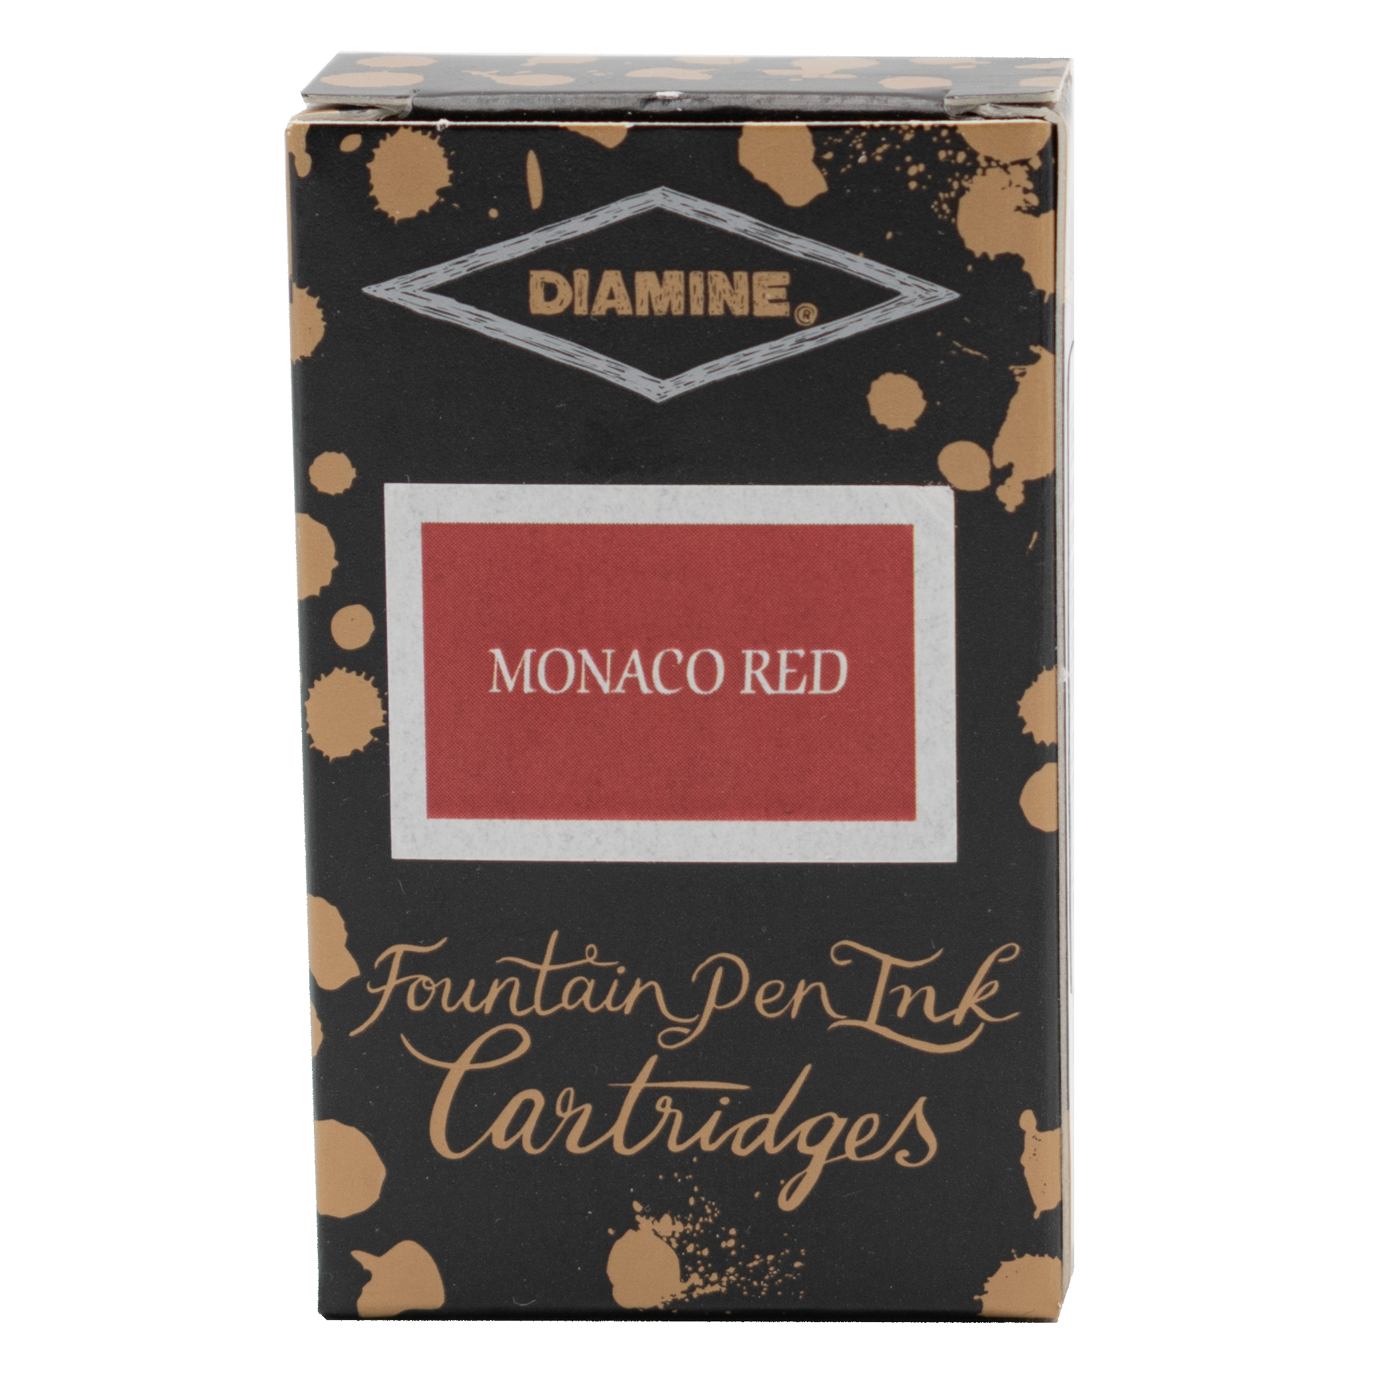 Diamine Monaco Red